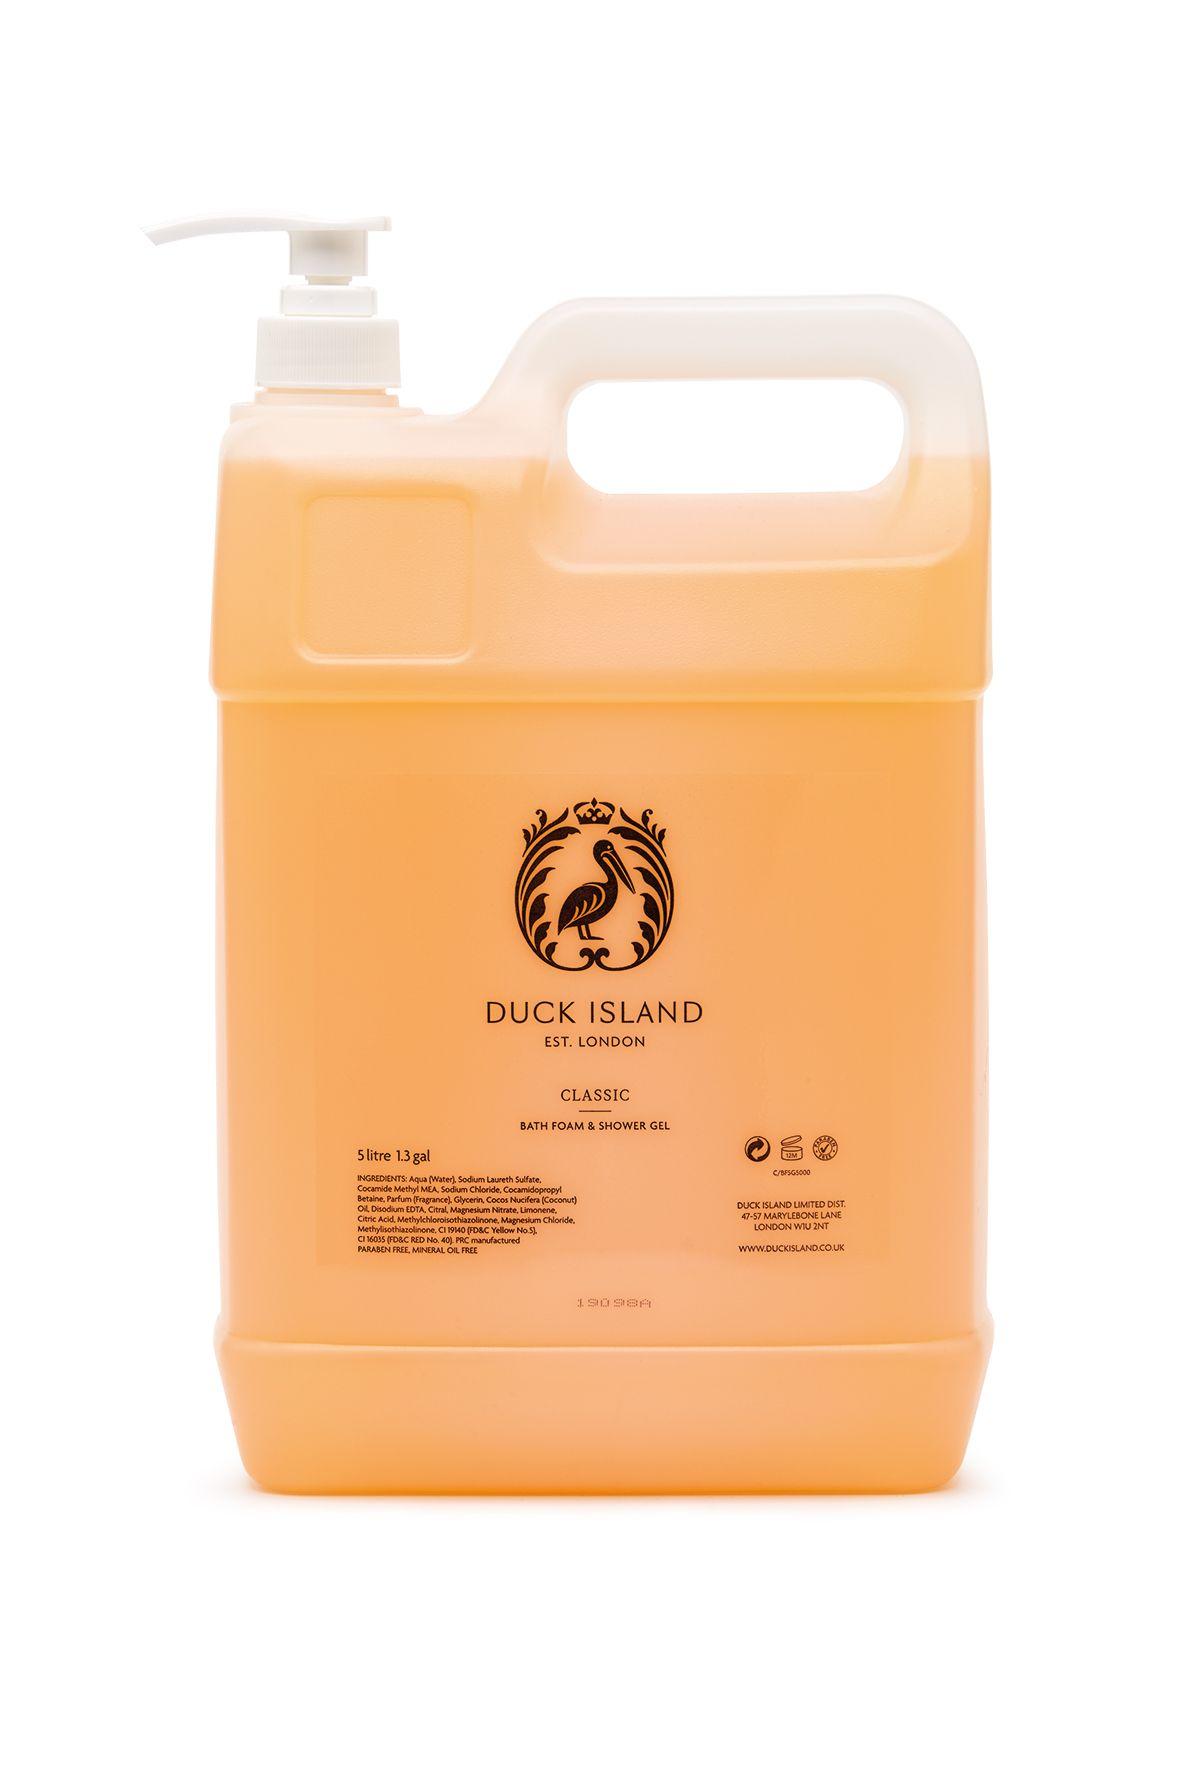 Duck Island 5 litre Classic hand wash dispenser